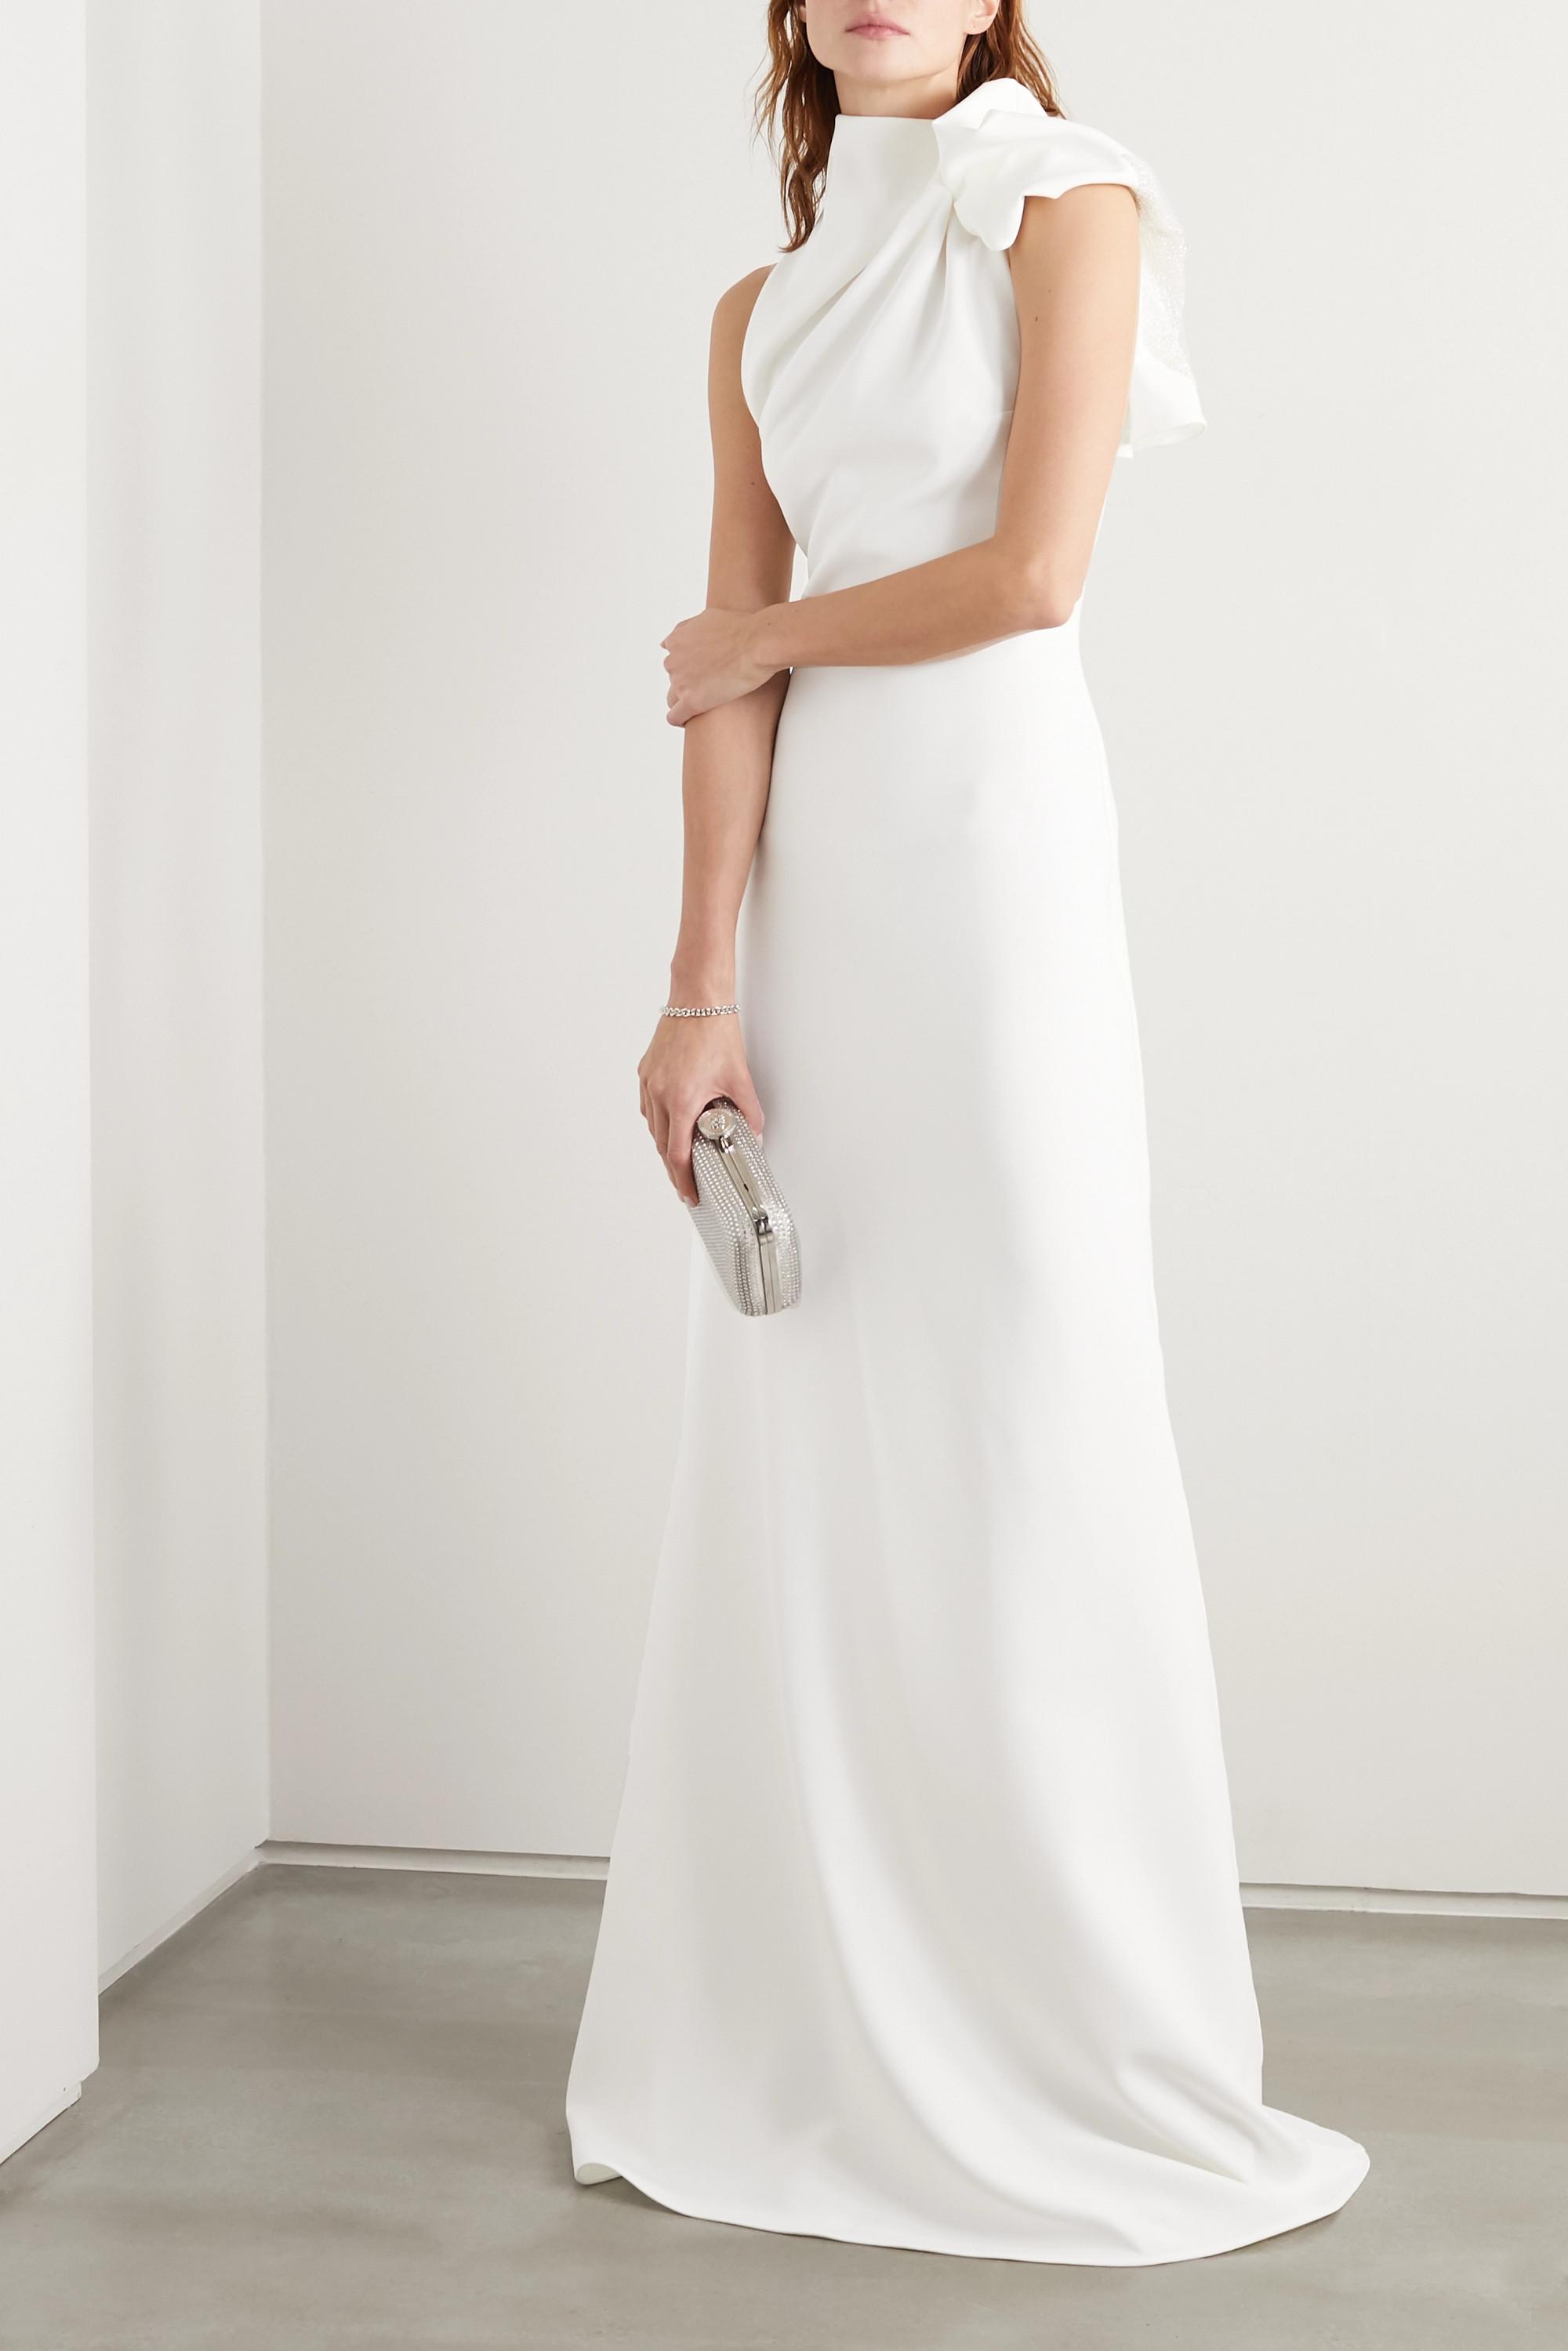 Toni Maticevski Present Gown Used Wedding Dress Save 22% - Stillwhite